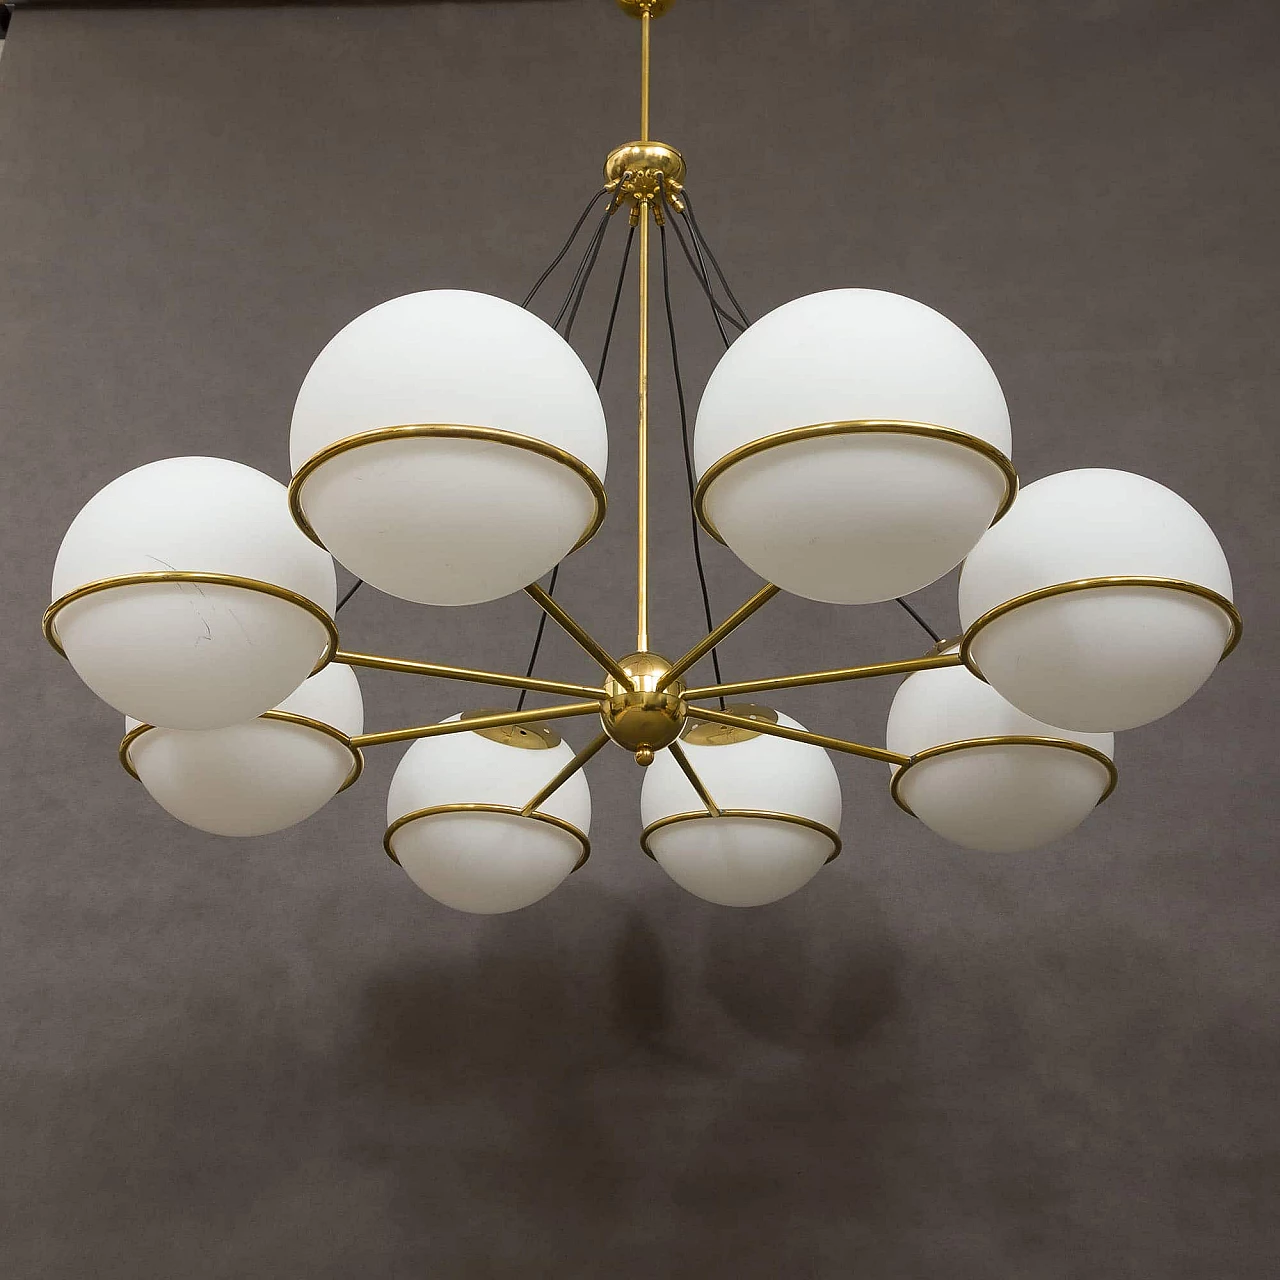 Brass chandelier in the Gino Sarfatti style with 8 opaline glass globes, 1970s 1376217